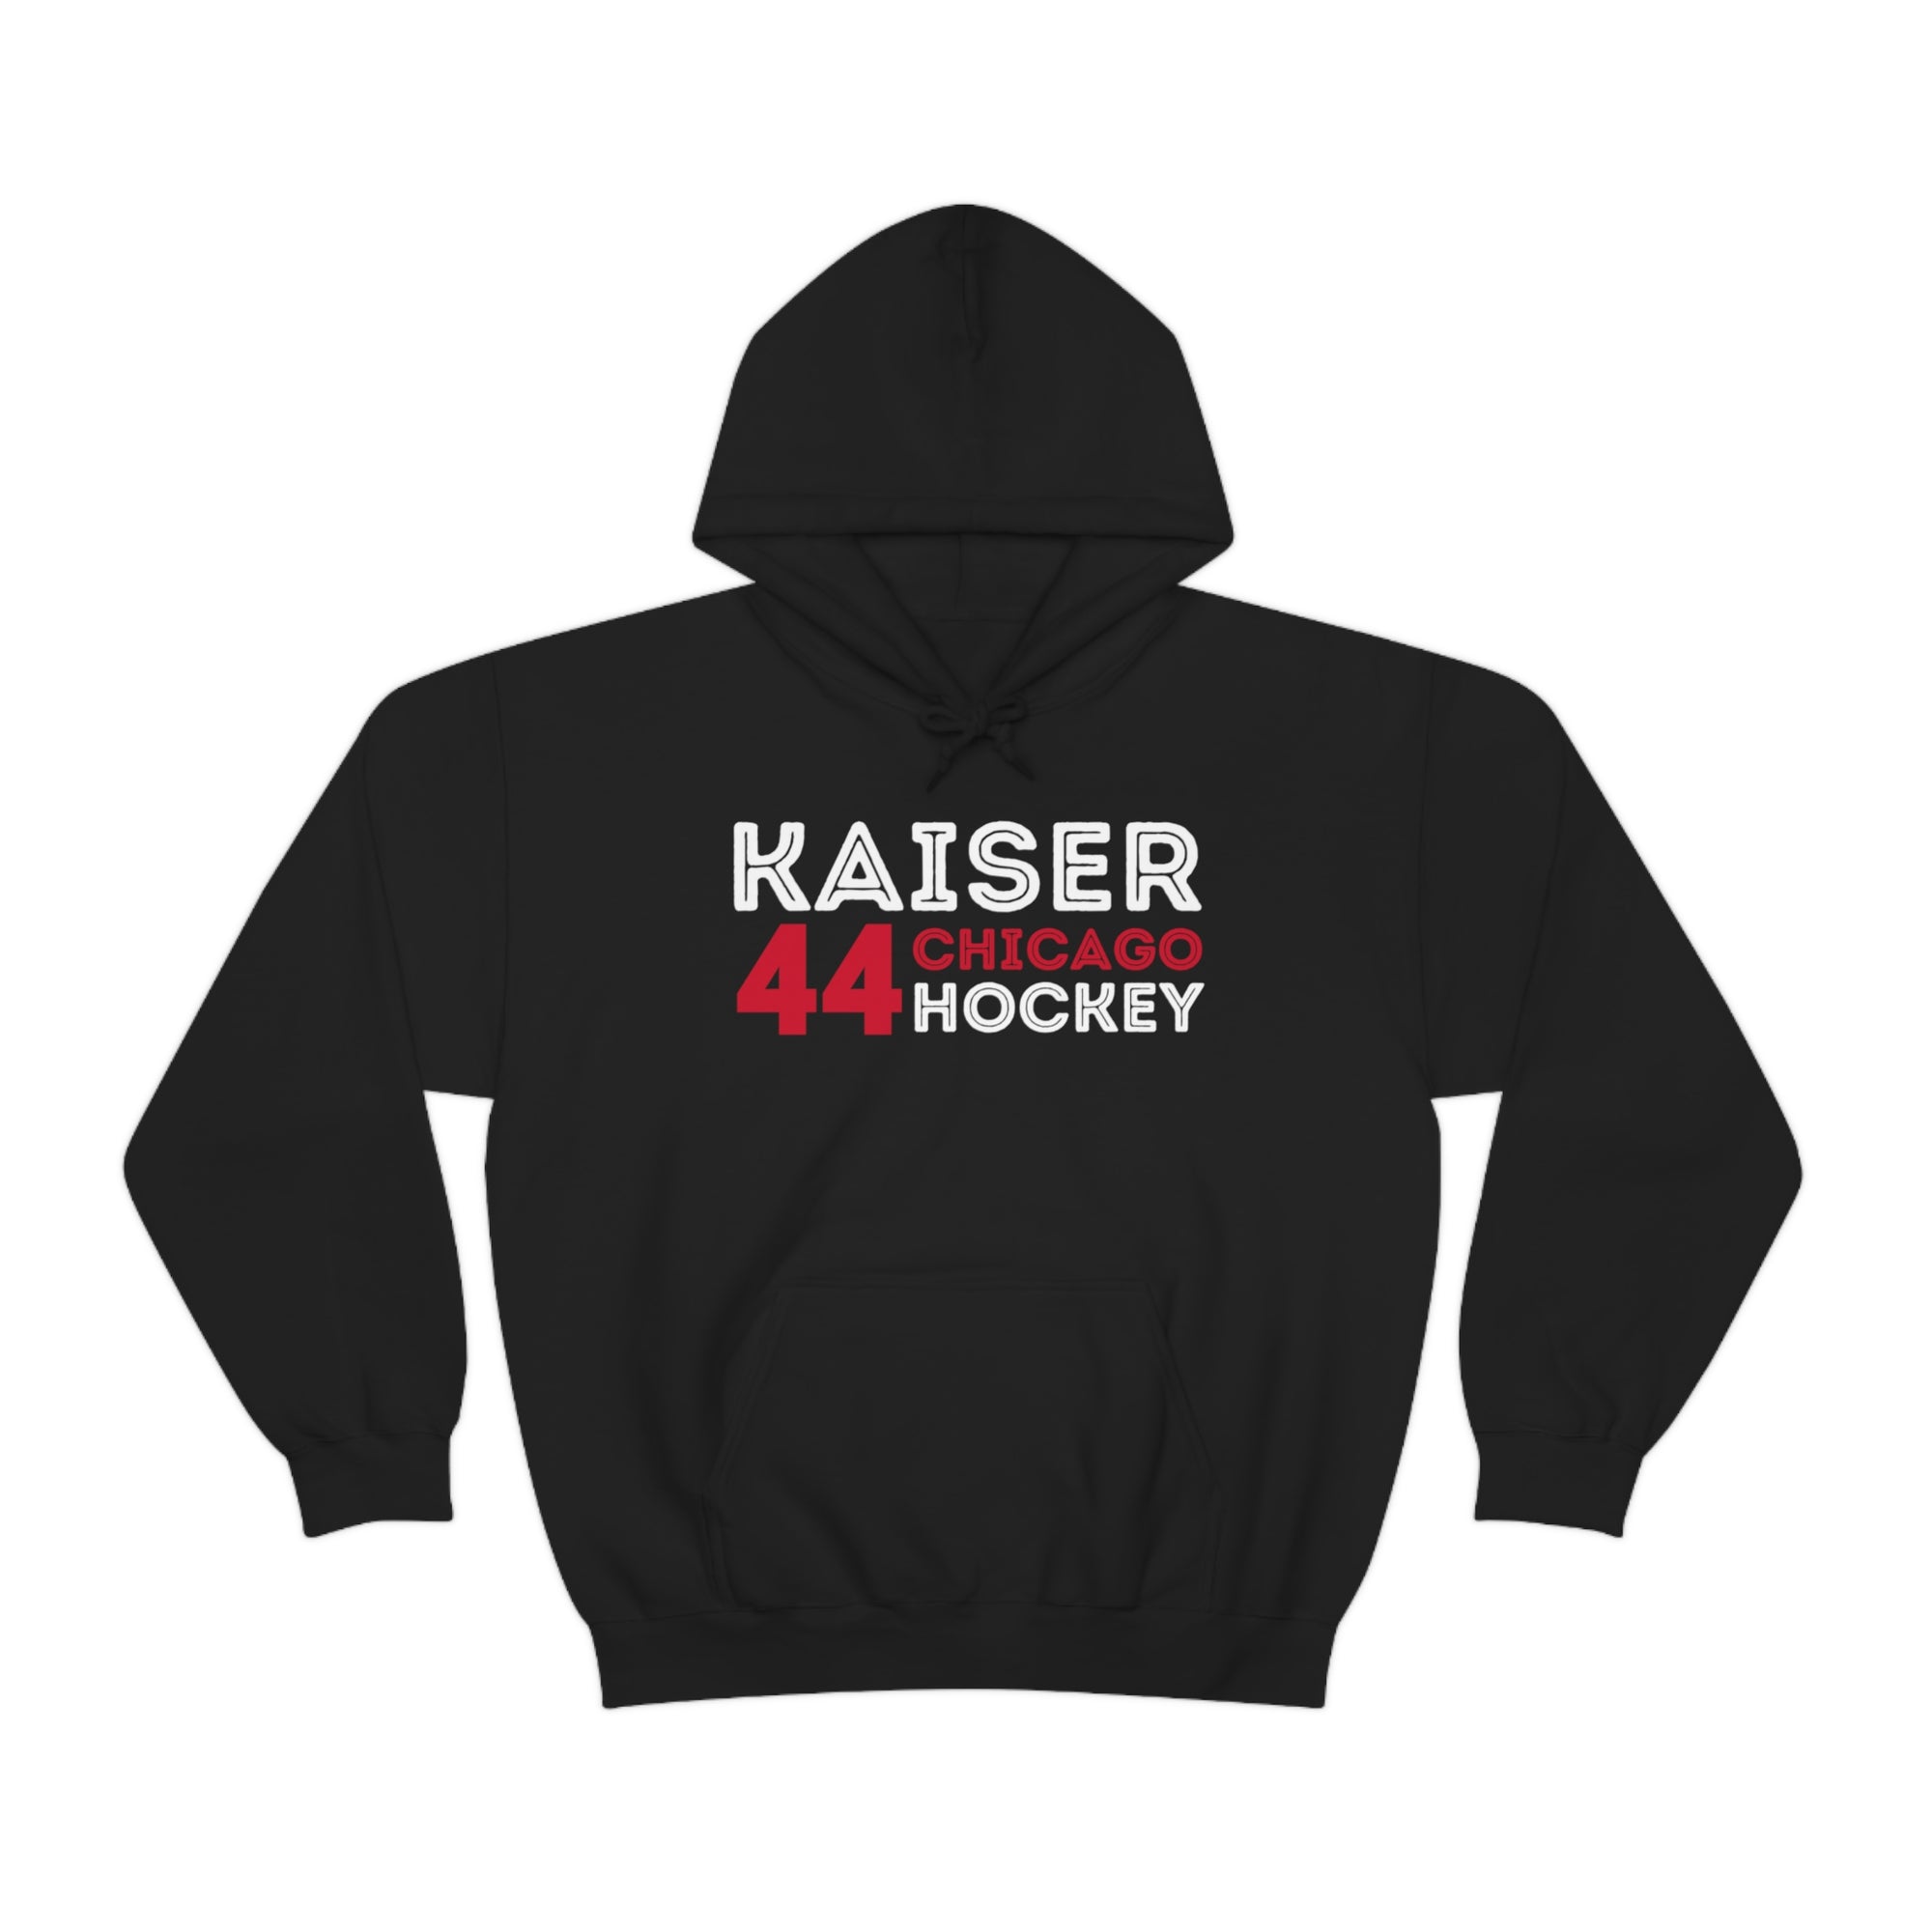 Kaiser 44 Chicago Hockey Grafitti Wall Design Unisex Hooded Sweatshirt